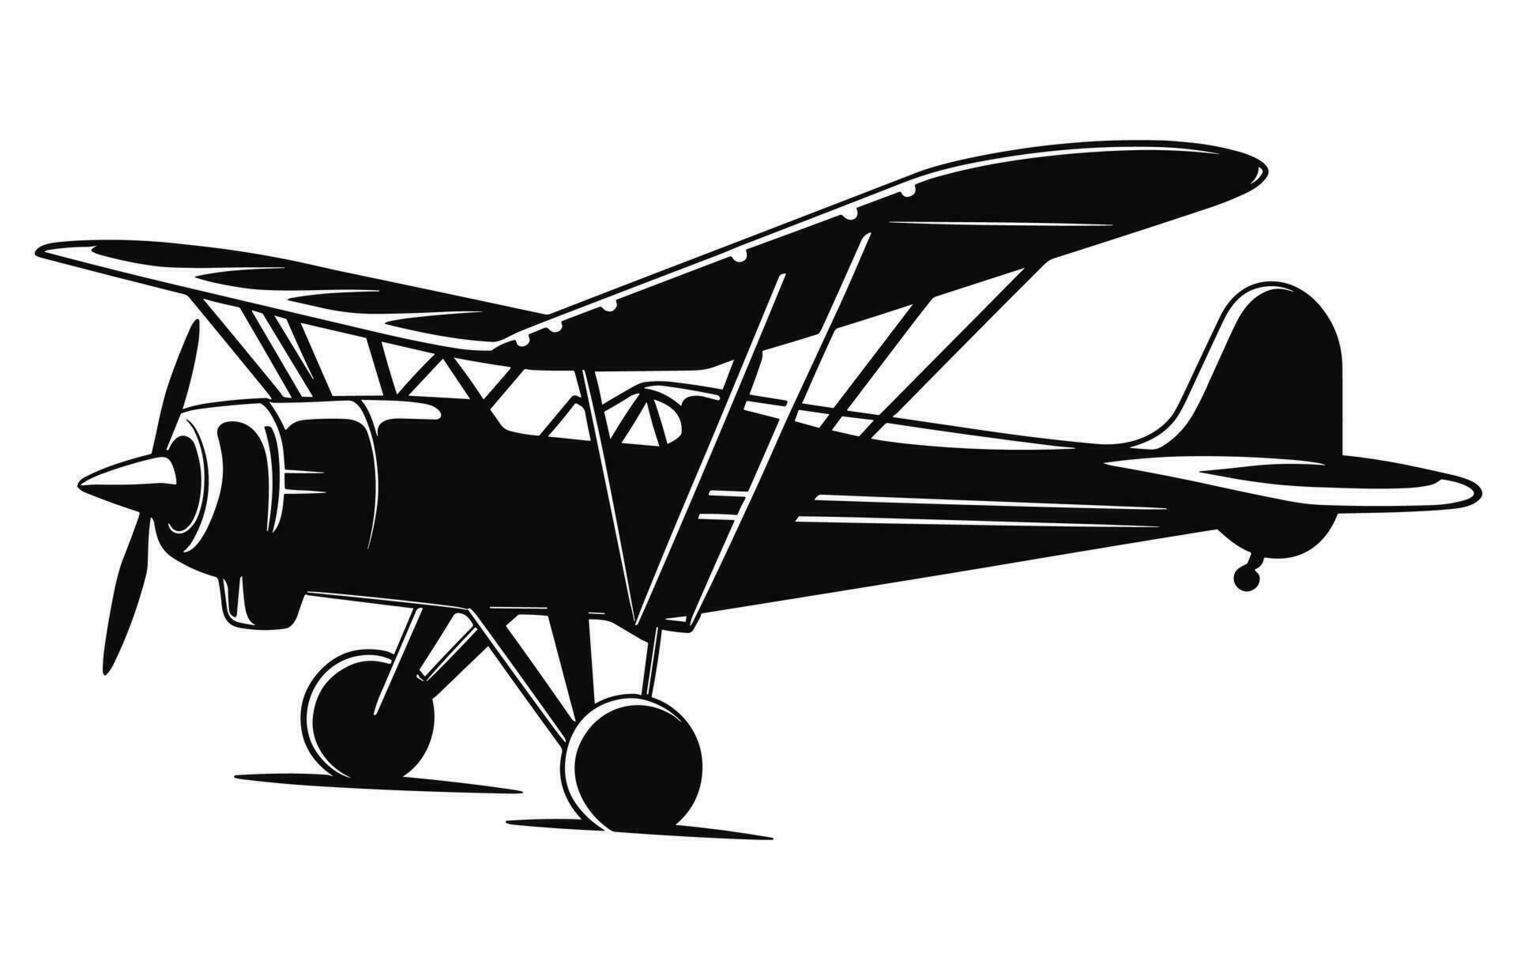 un biplano silueta clipart aislado en un blanco fondo, avión negro vector diseño